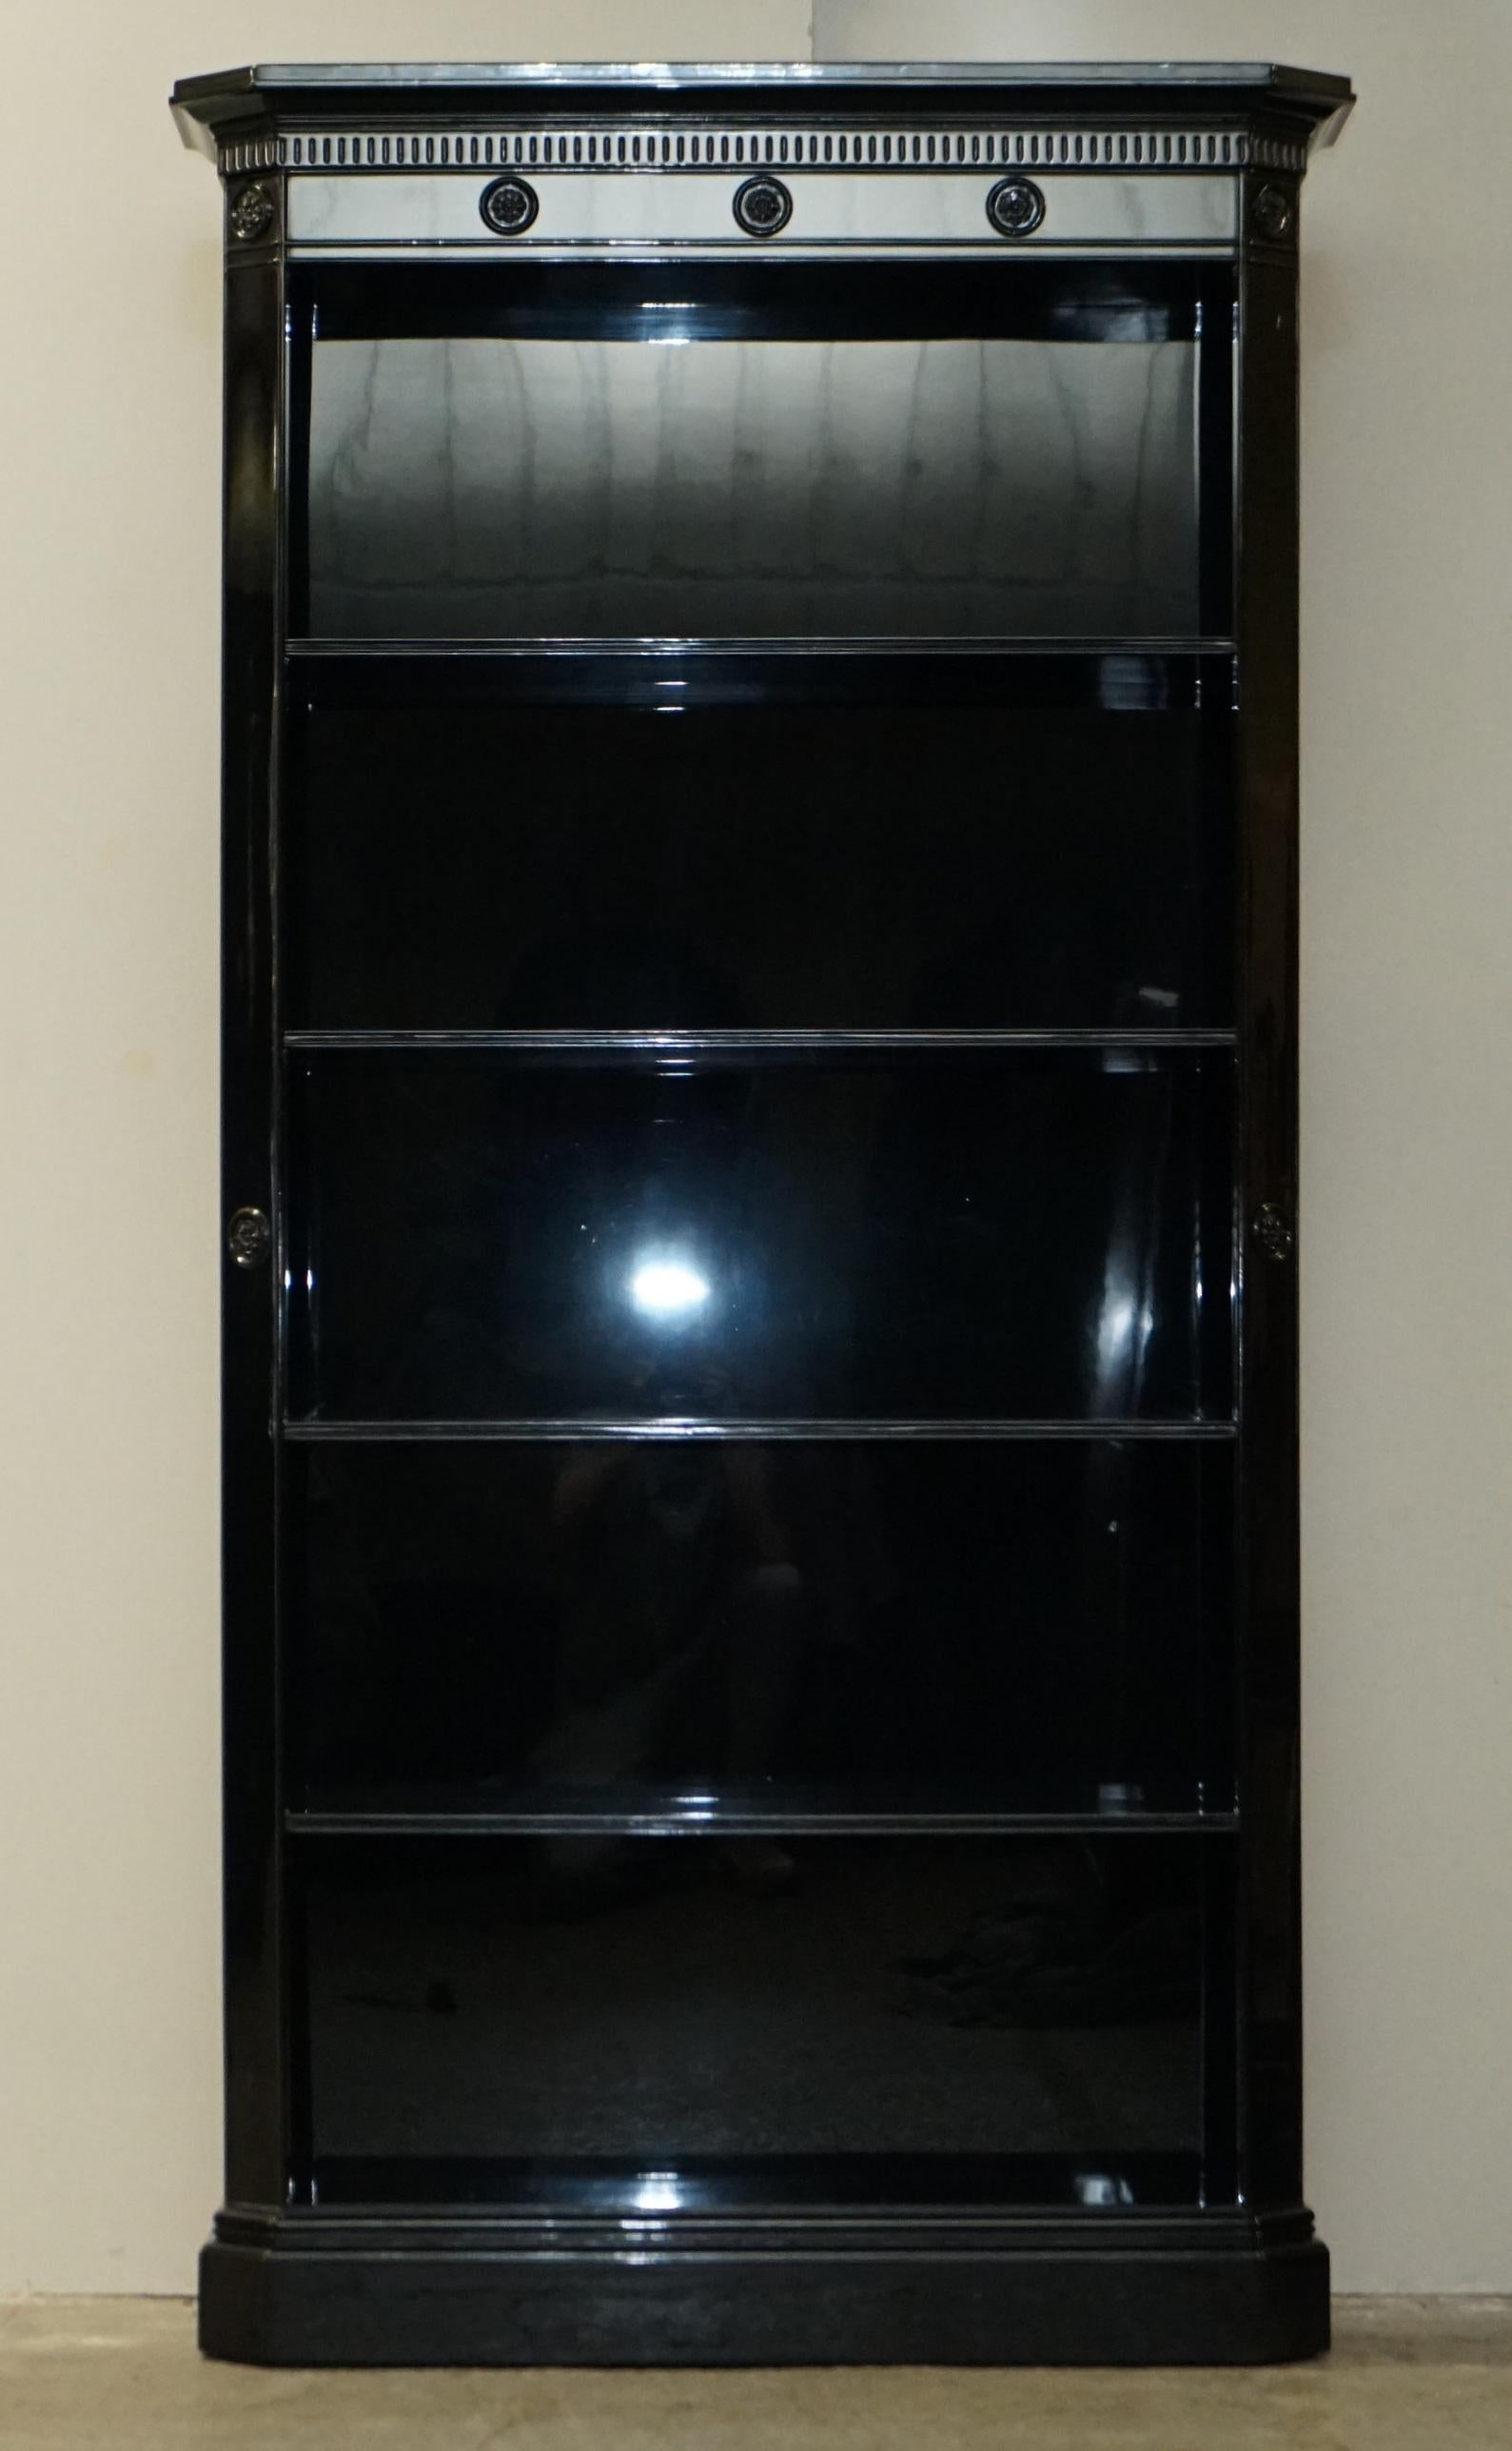 ralph lauren bookcase